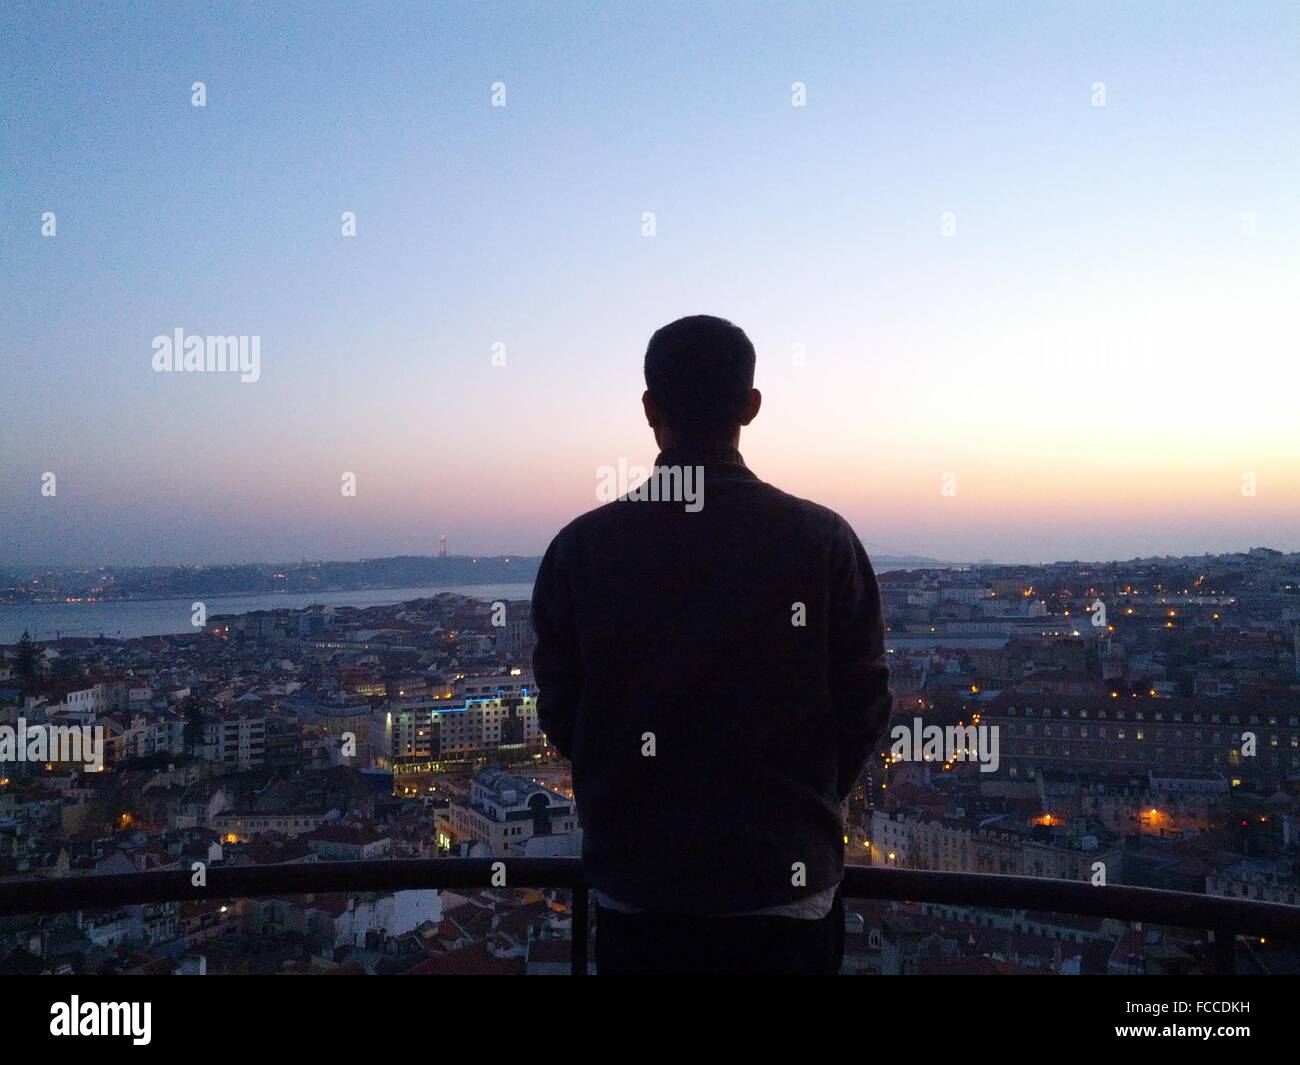 Man Overlooking City At Dusk Stock Photo